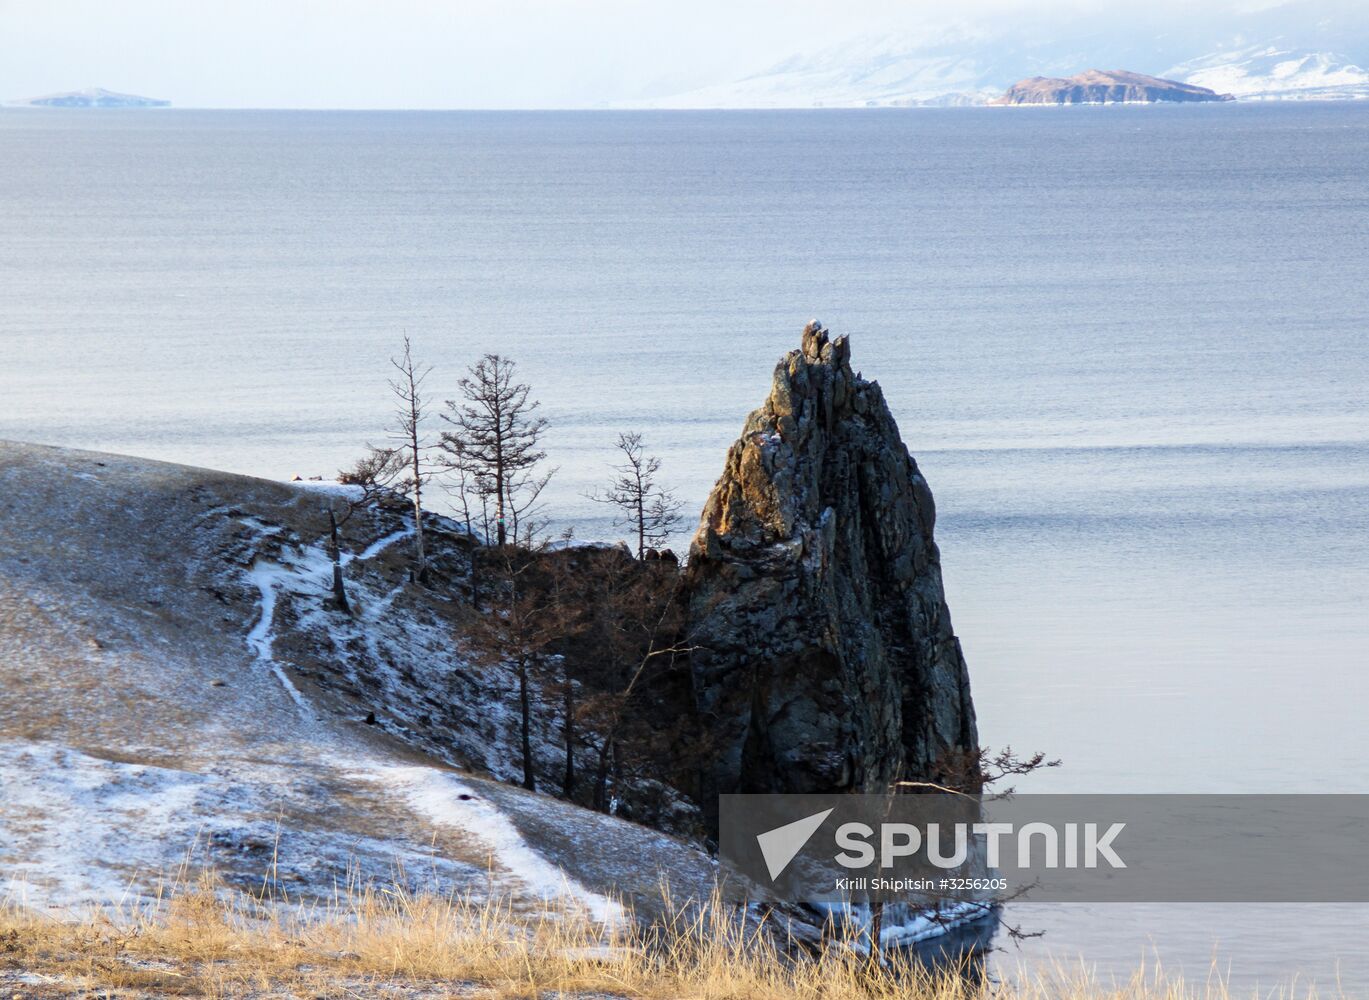 Olkhon Island of Lake Baikal